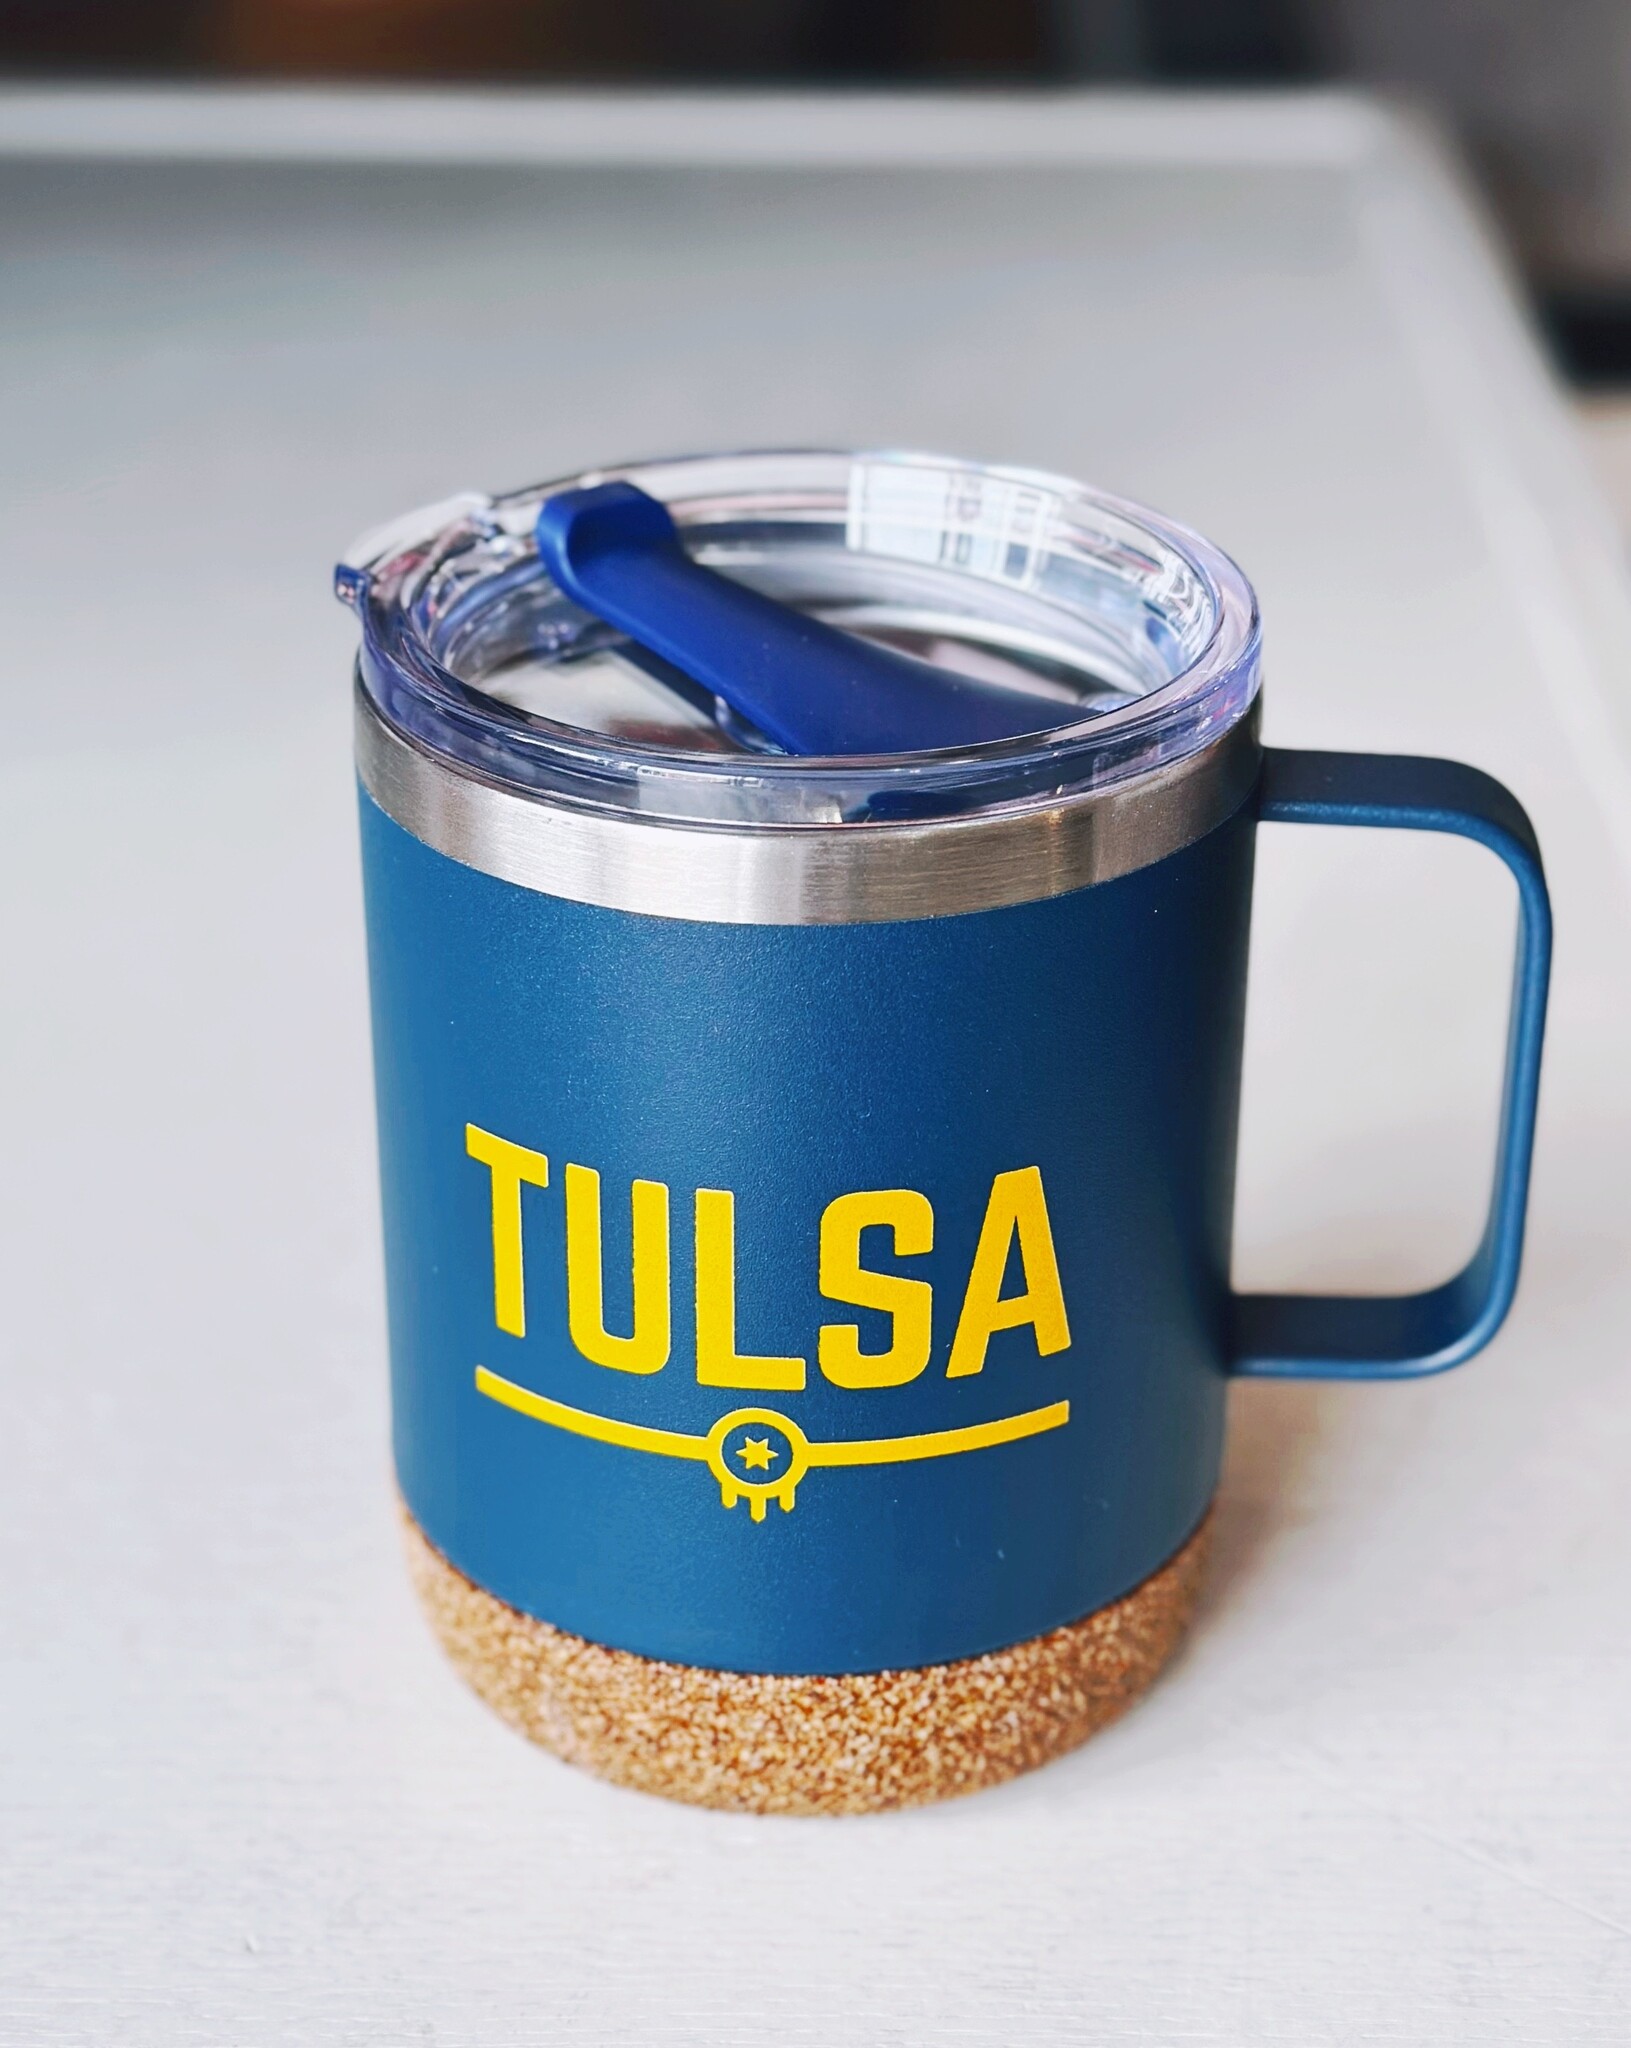 Ida Red Tulsa Flag Insulated Mug - Navy